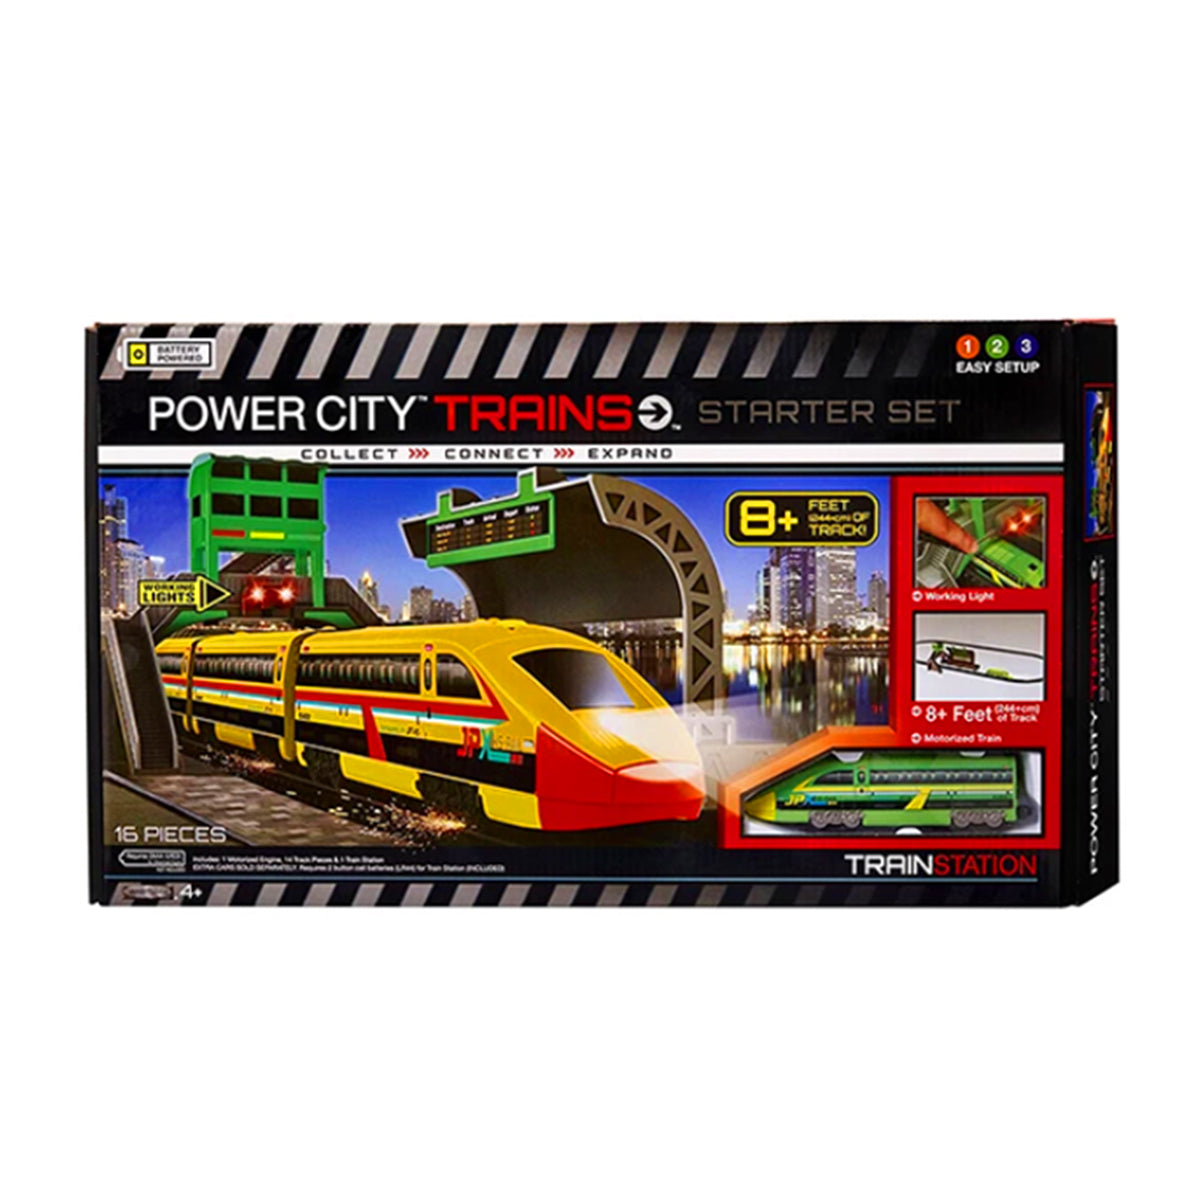 Power City Trains - Starter Set - Train Station